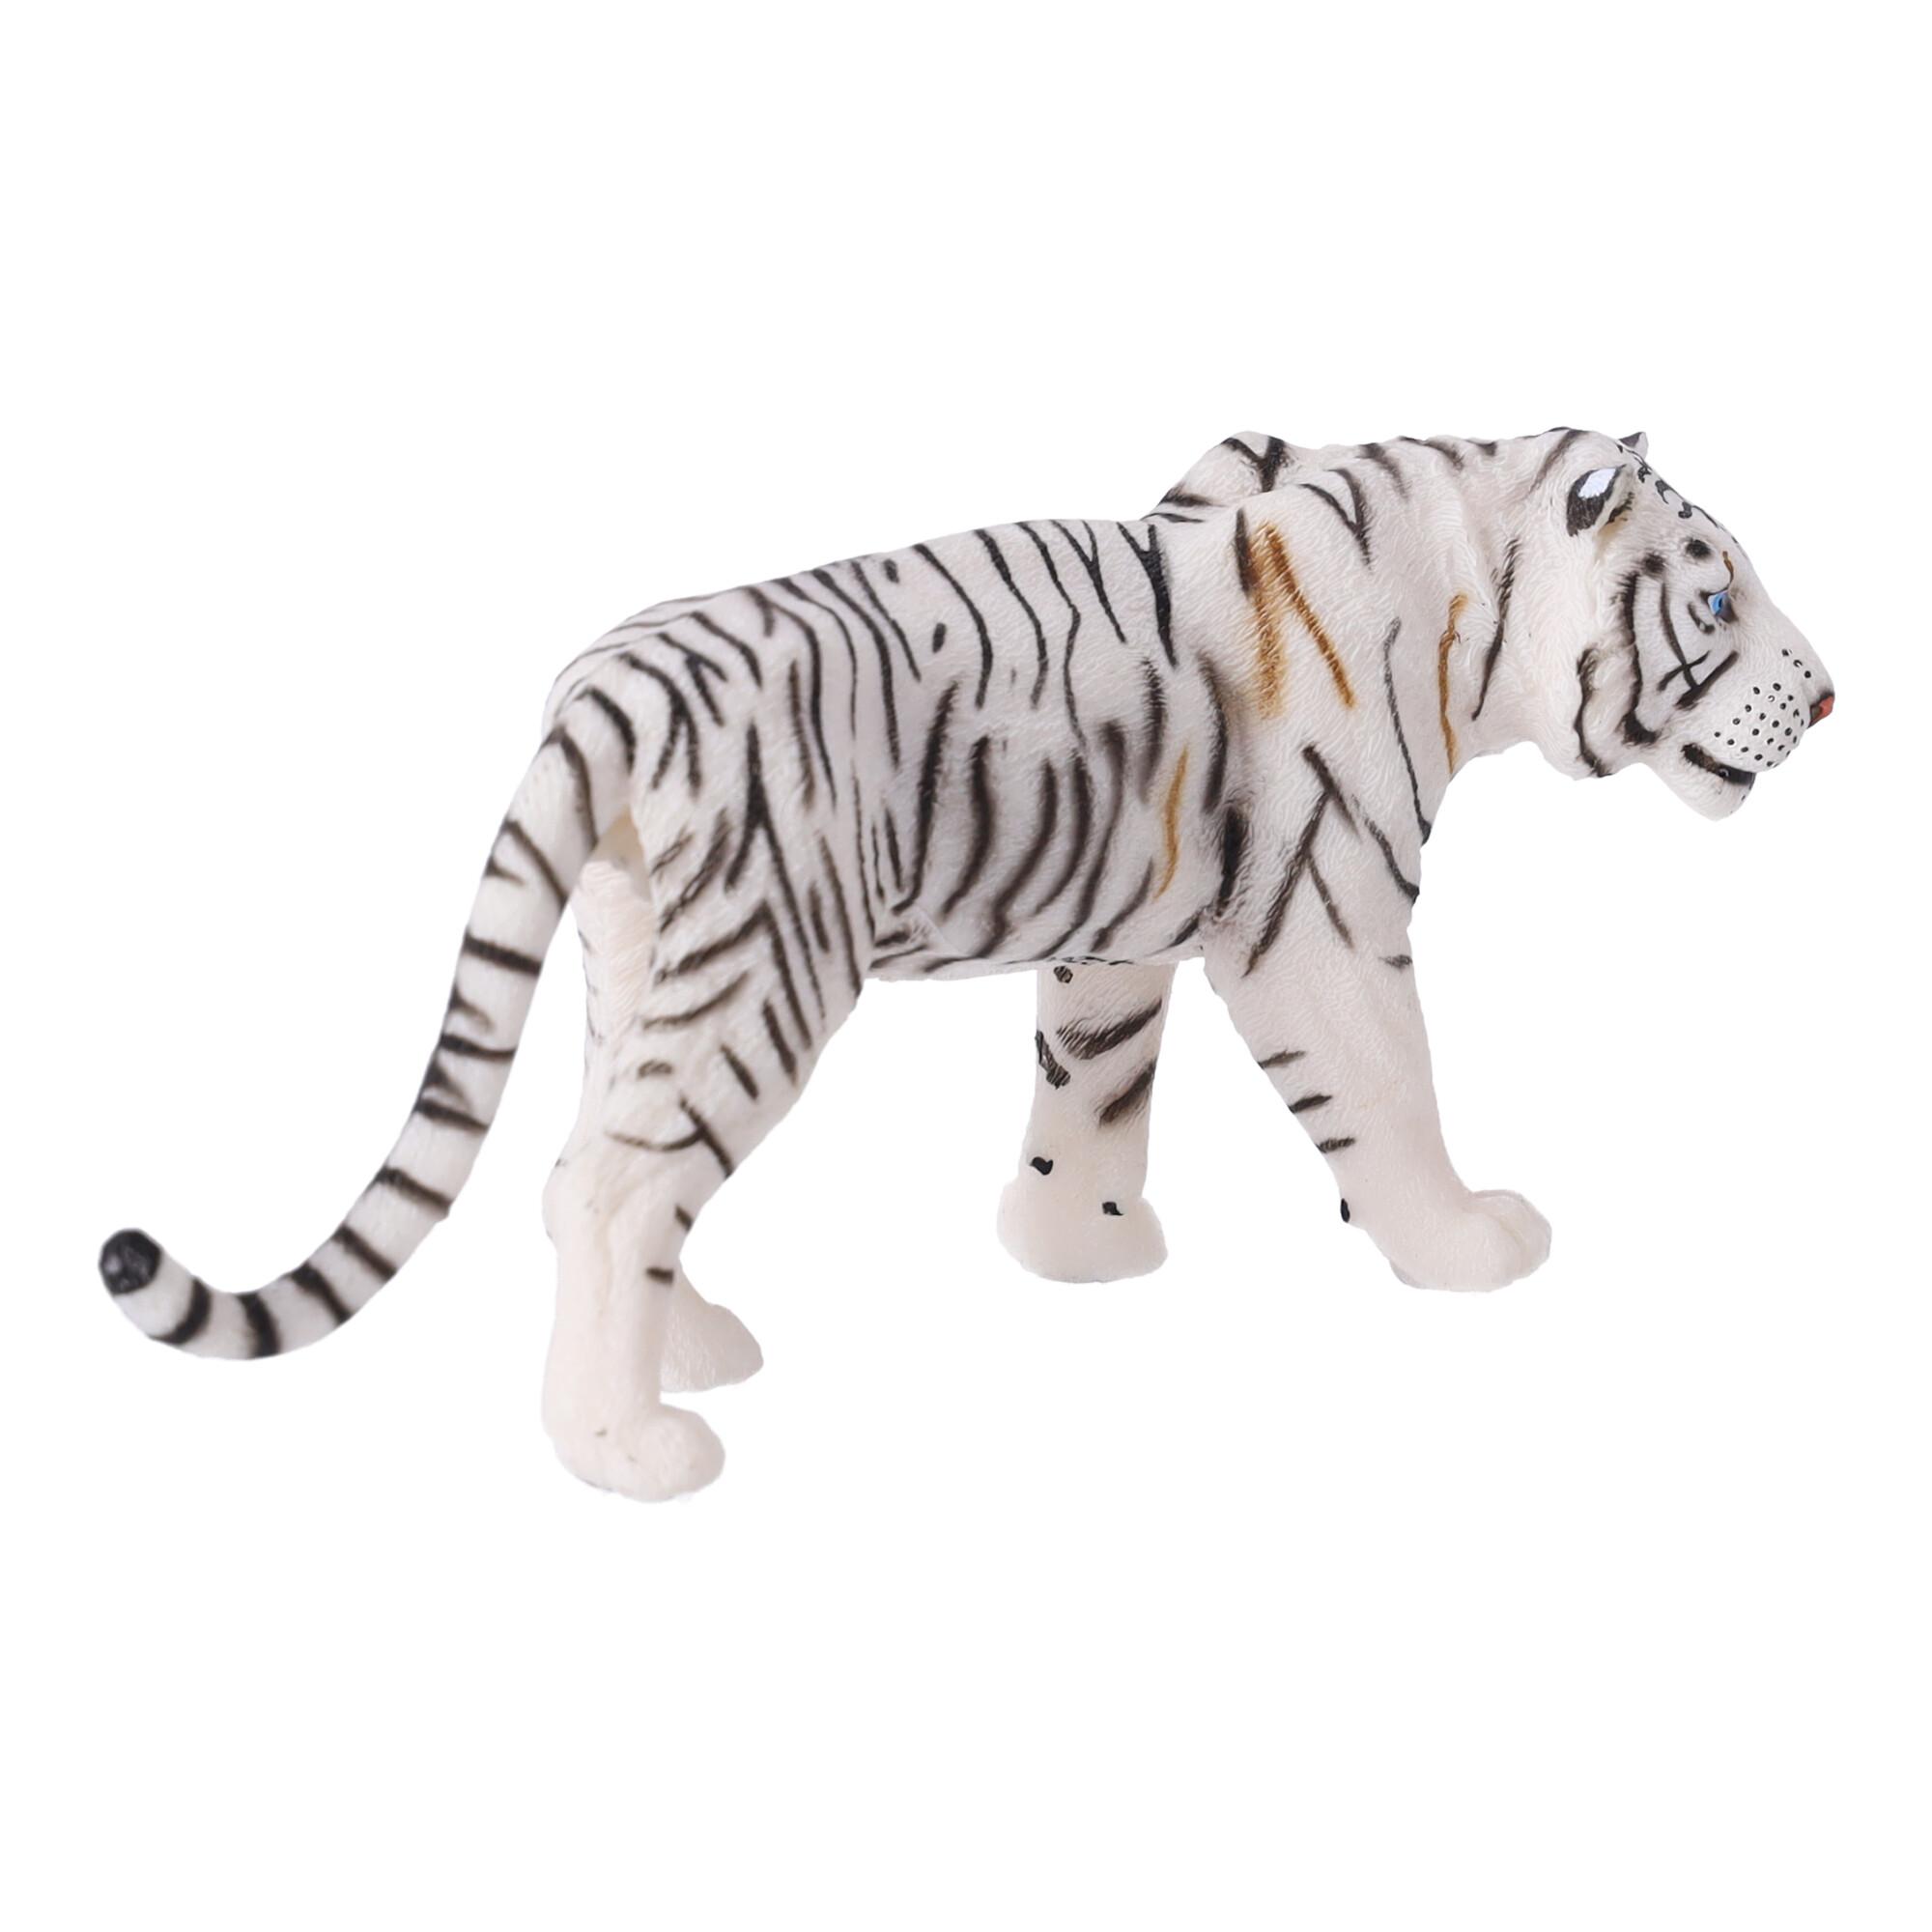 Collectible figurine Tiger white, Papo